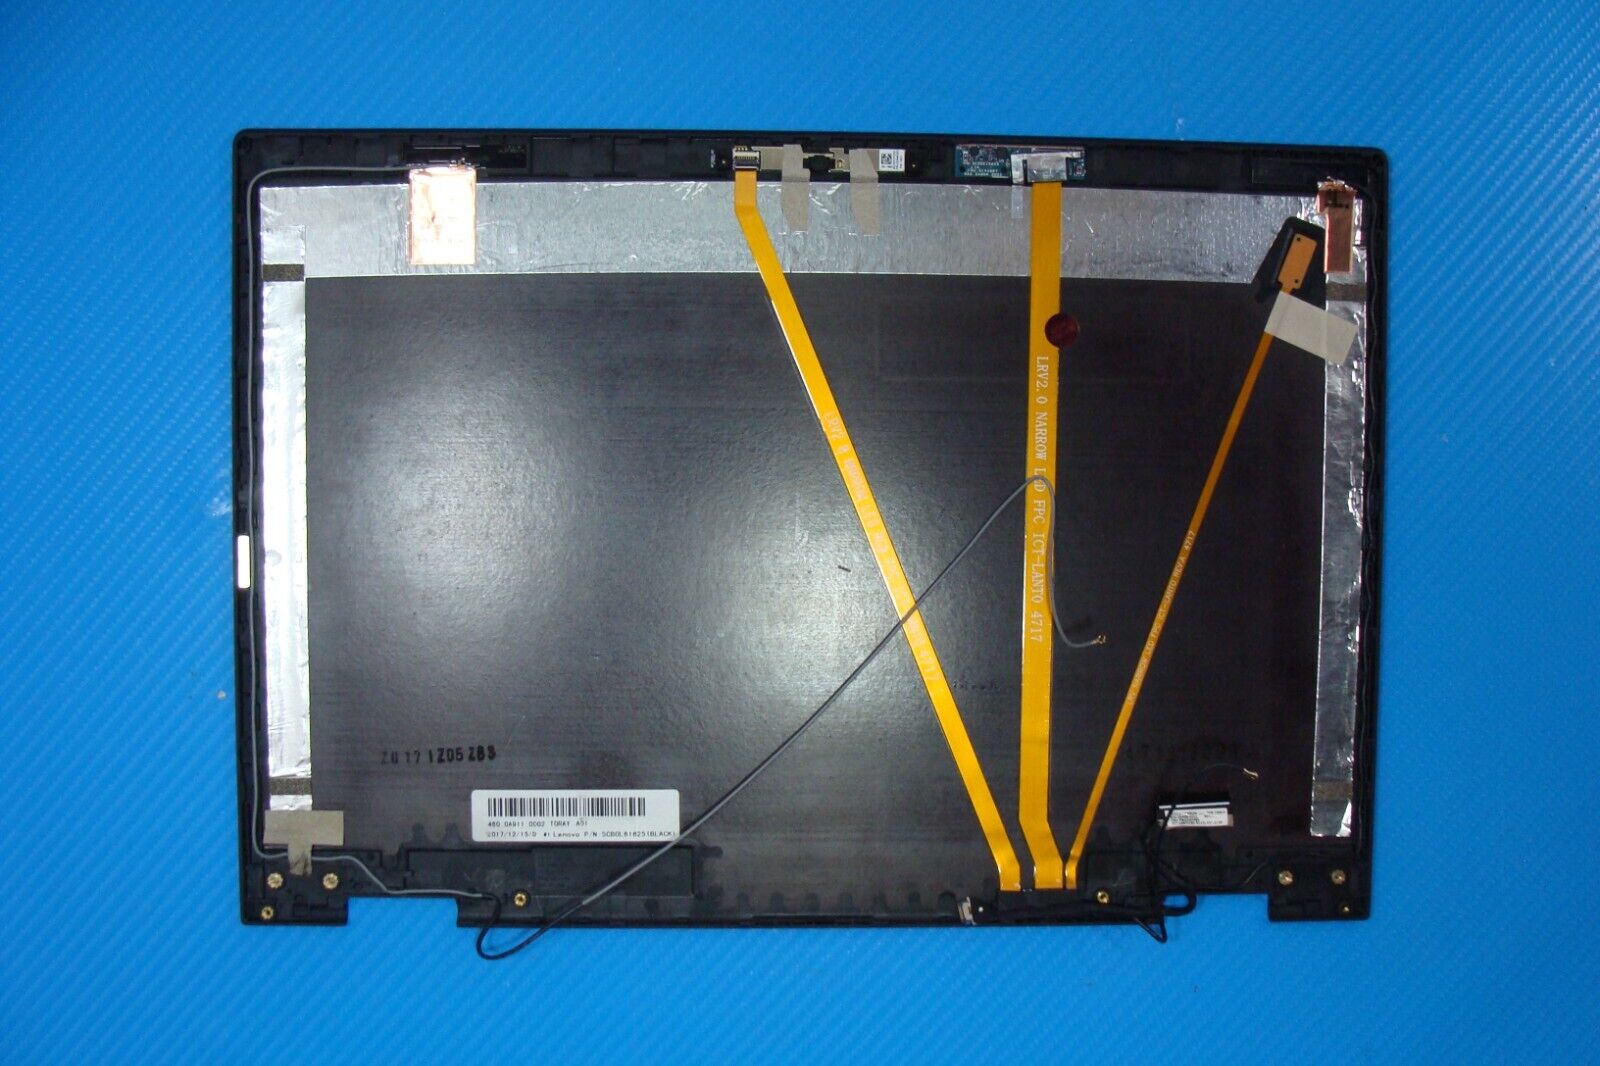 Lenovo ThinkPad 14” X1 Yoga 2nd Gen OEM Laptop LCD Back Cover Black SCB0L81625